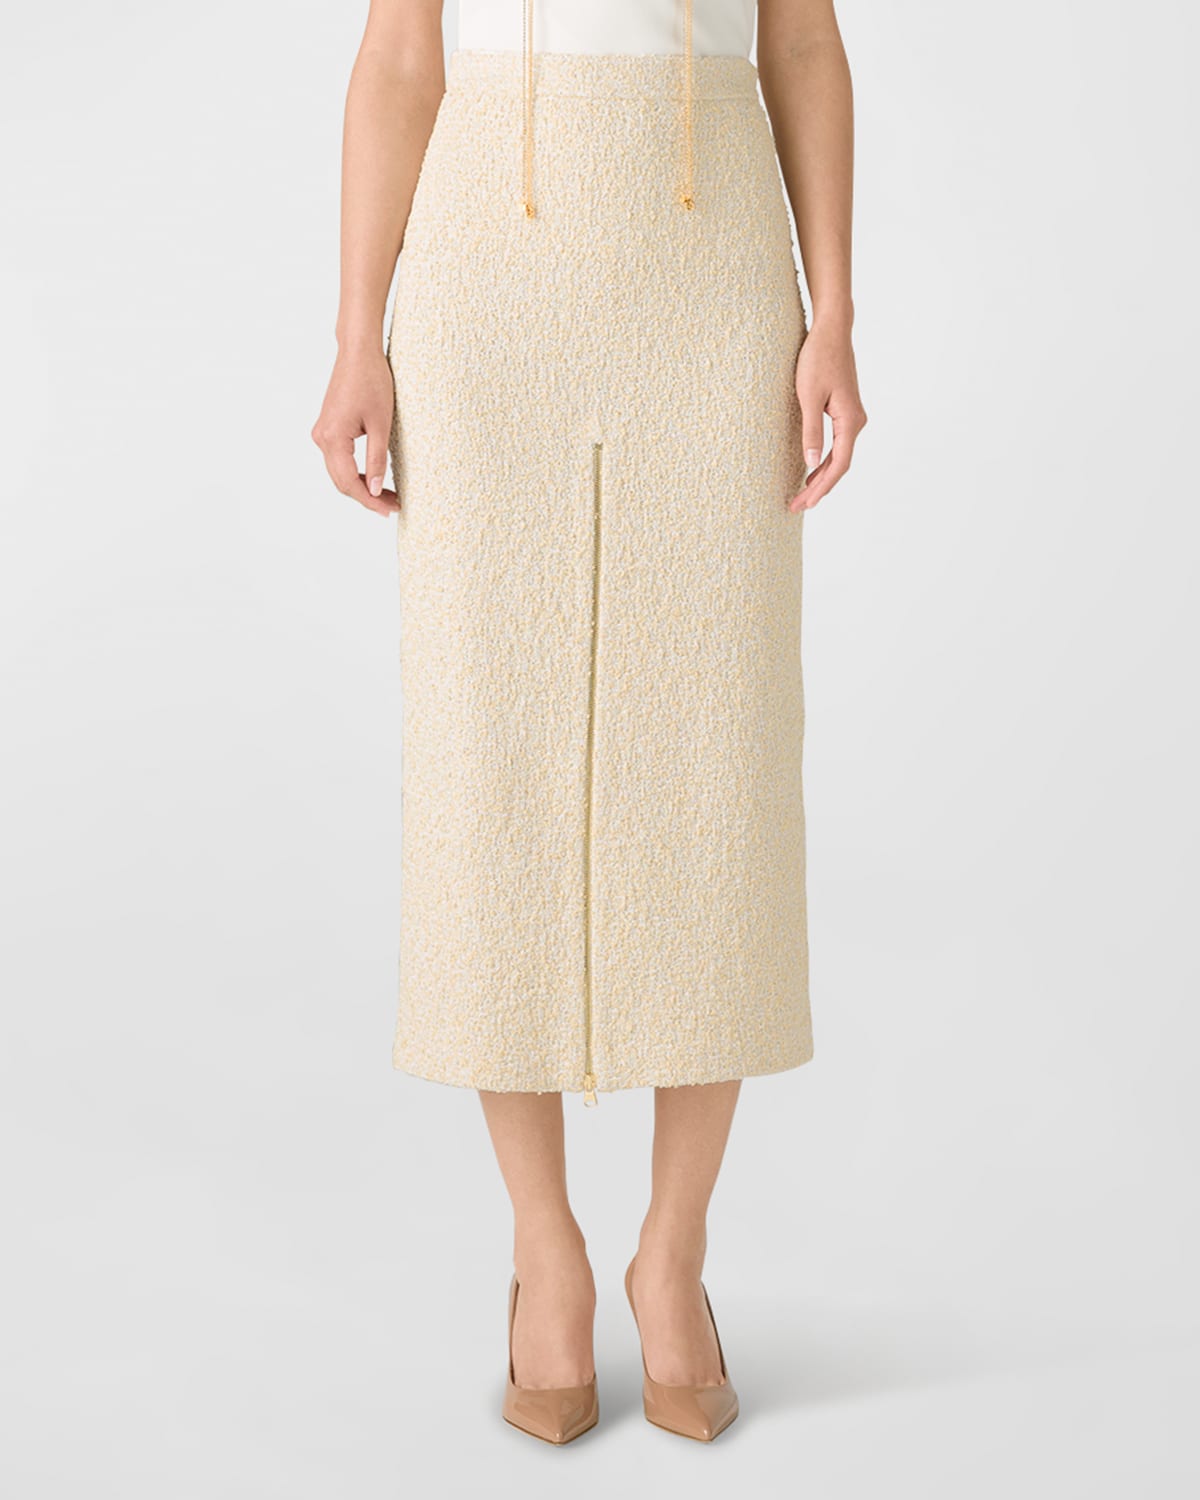 St John Multi Boucle Tweed Skirt With Slit In Cream/ecru